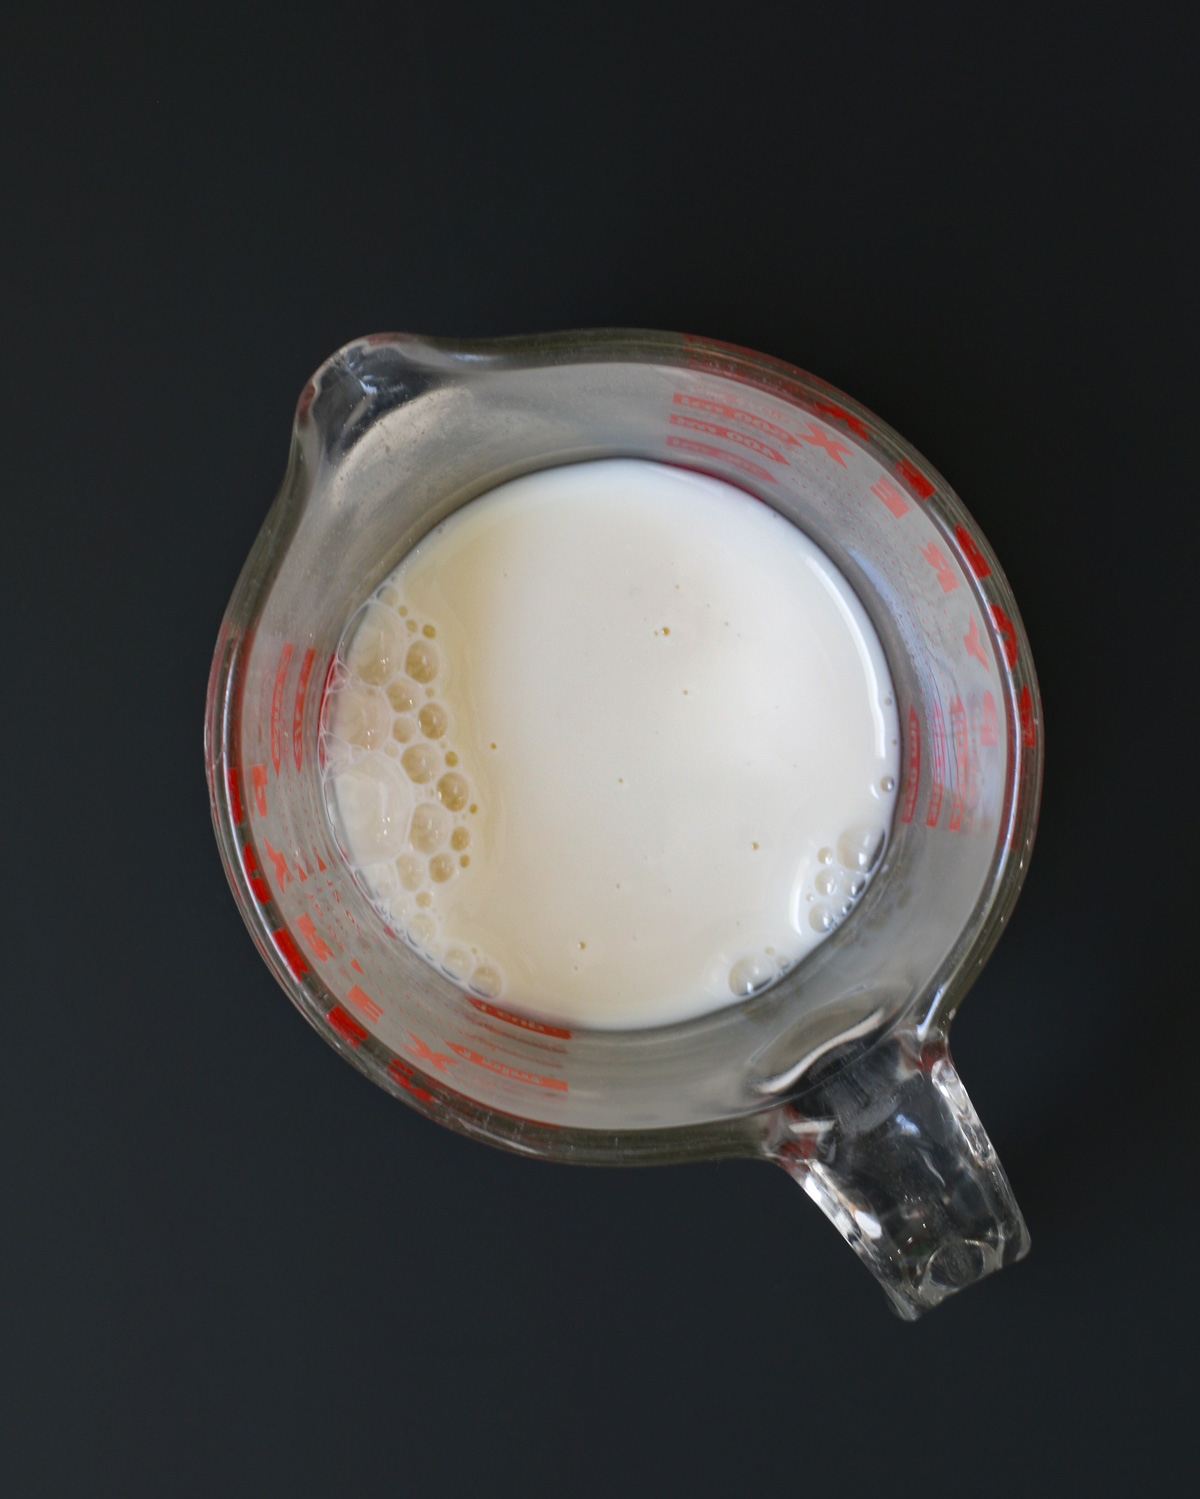 milk in glass pitcher.